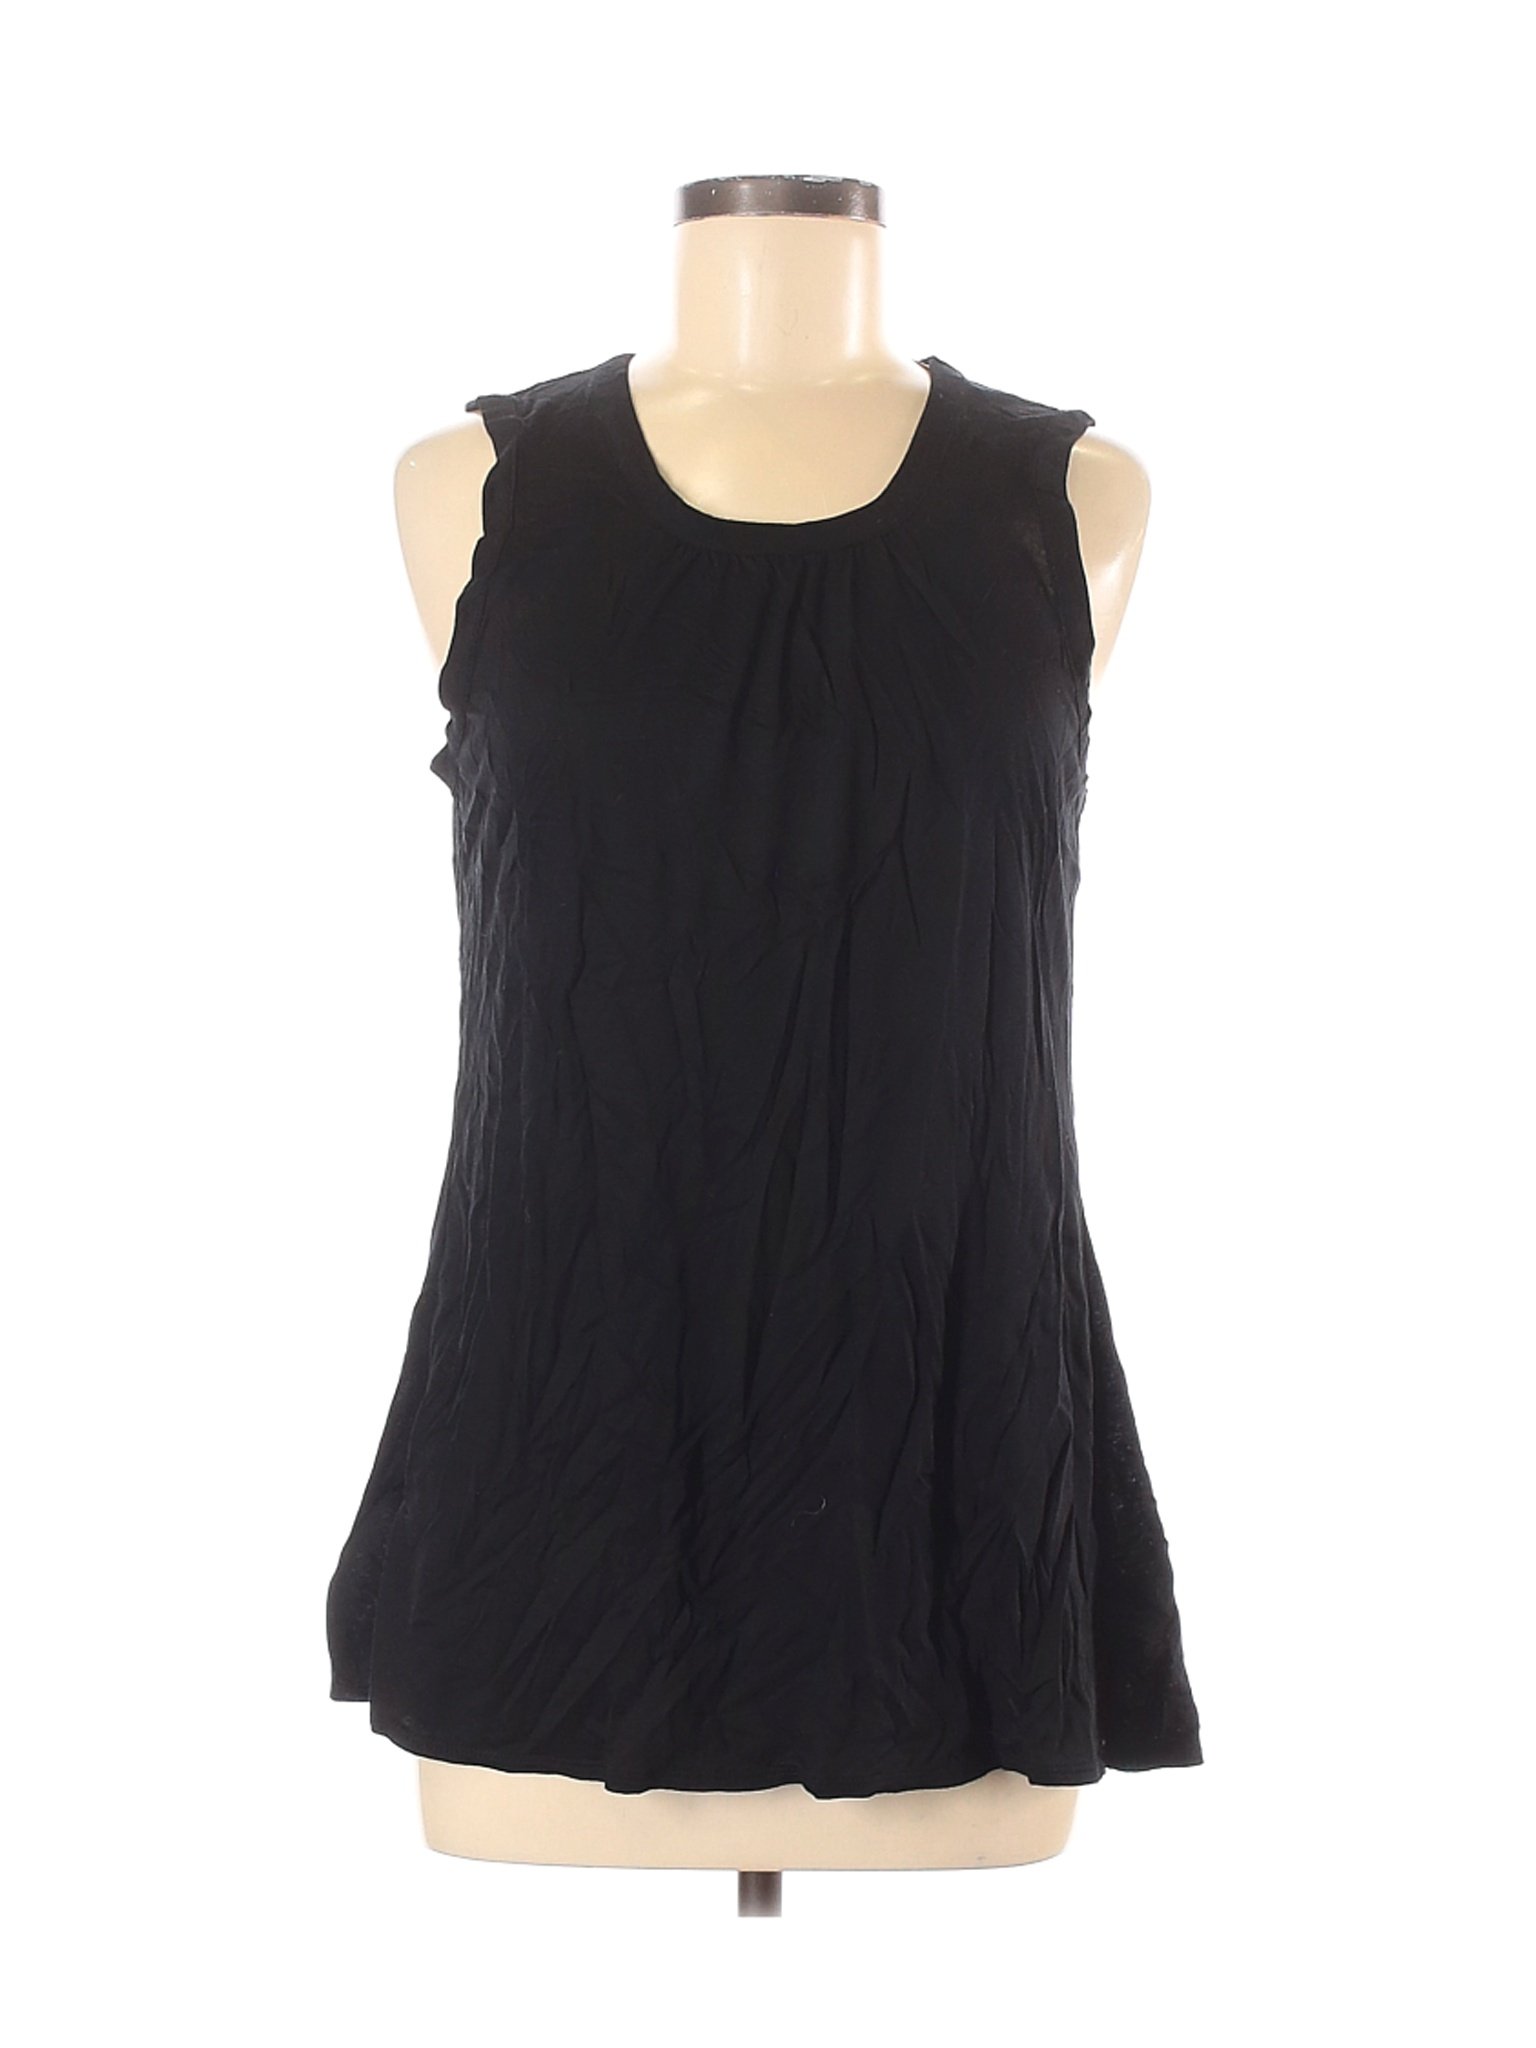 NWT Gap Women Black Sleeveless T-Shirt M | eBay